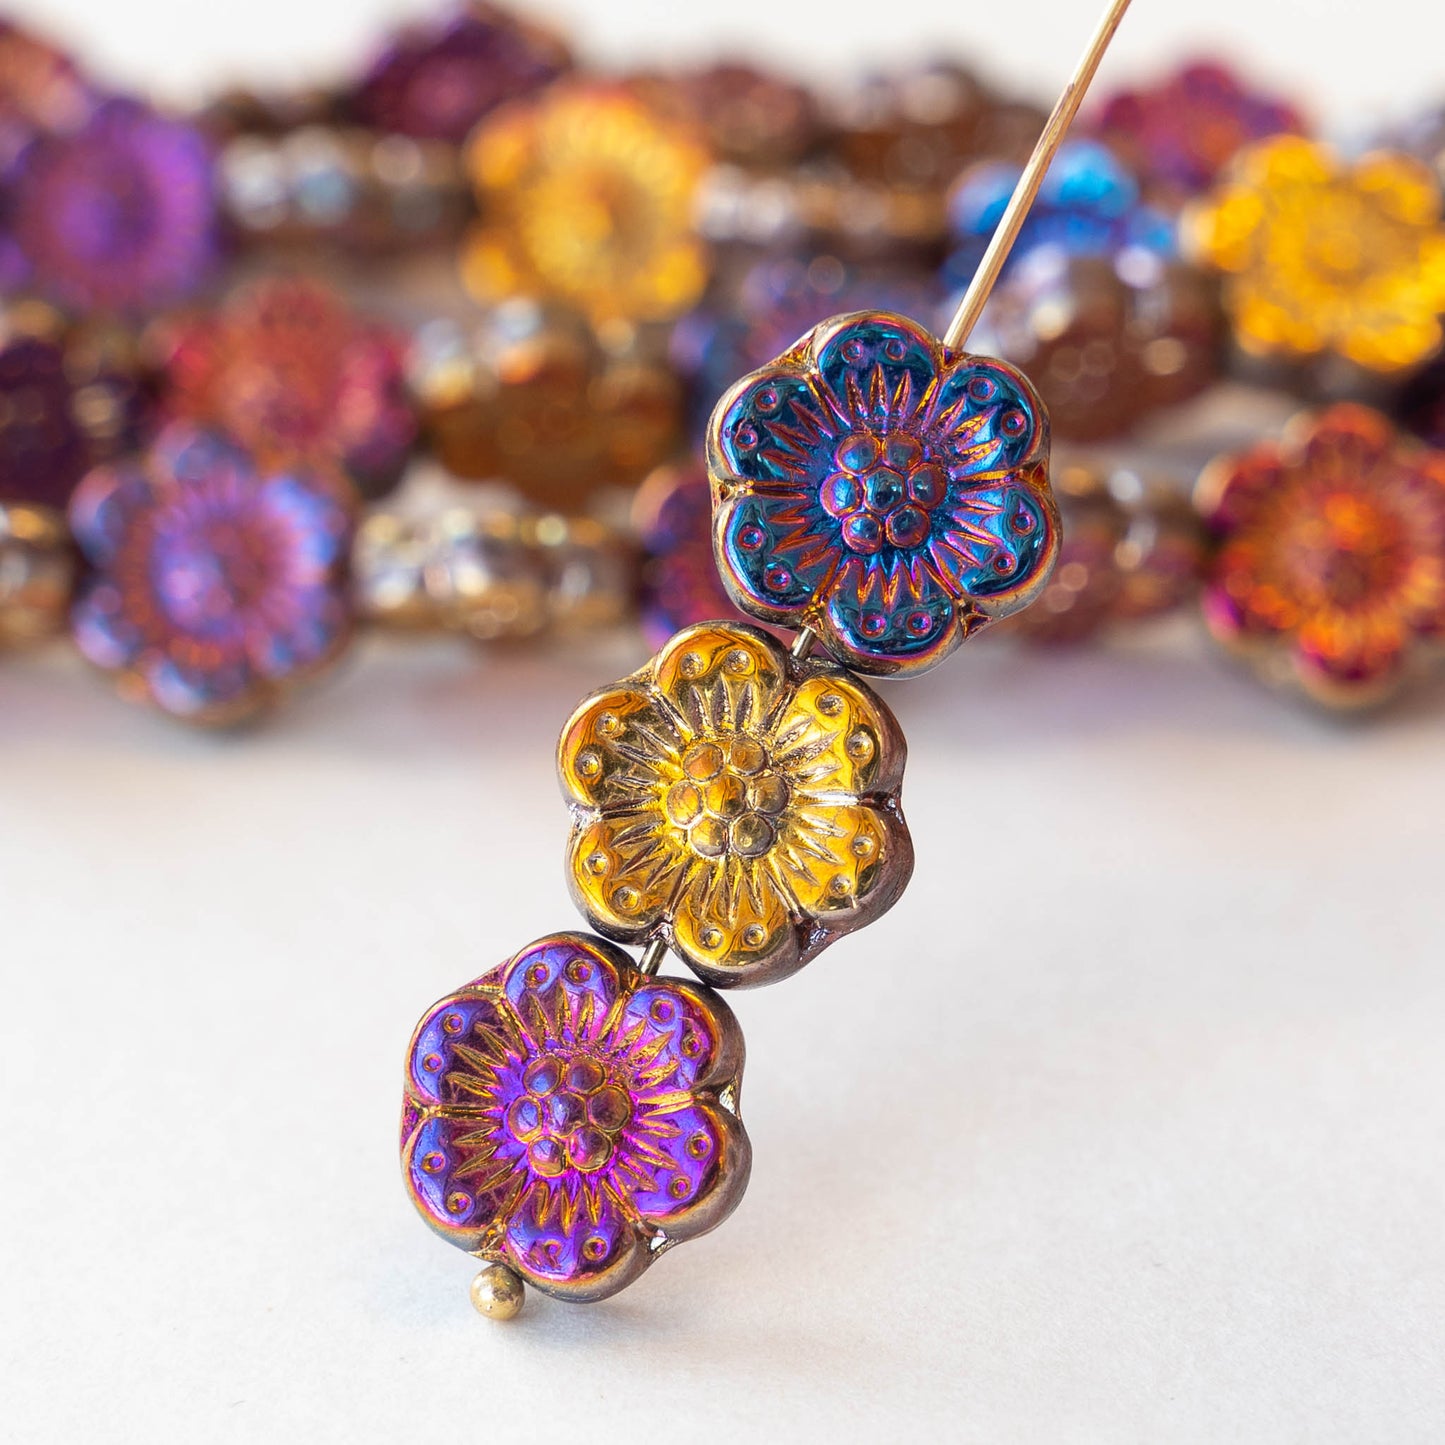 Load image into Gallery viewer, 14mm Anemone Flower Beads - Metallic Iris Mix - 10 Beads
